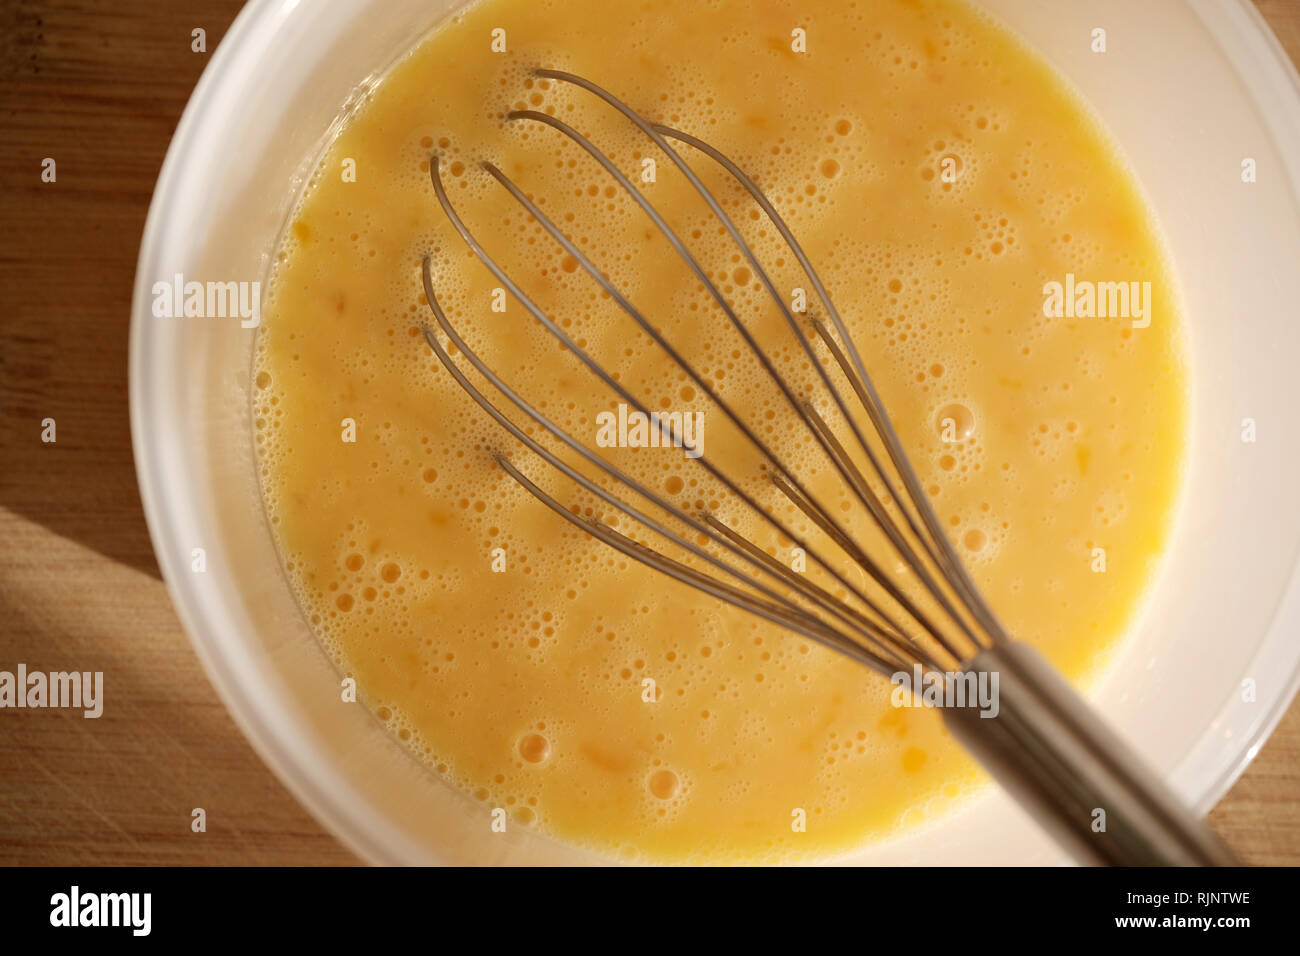 Huevos batidos fotografías e imágenes de alta resolución - Alamy